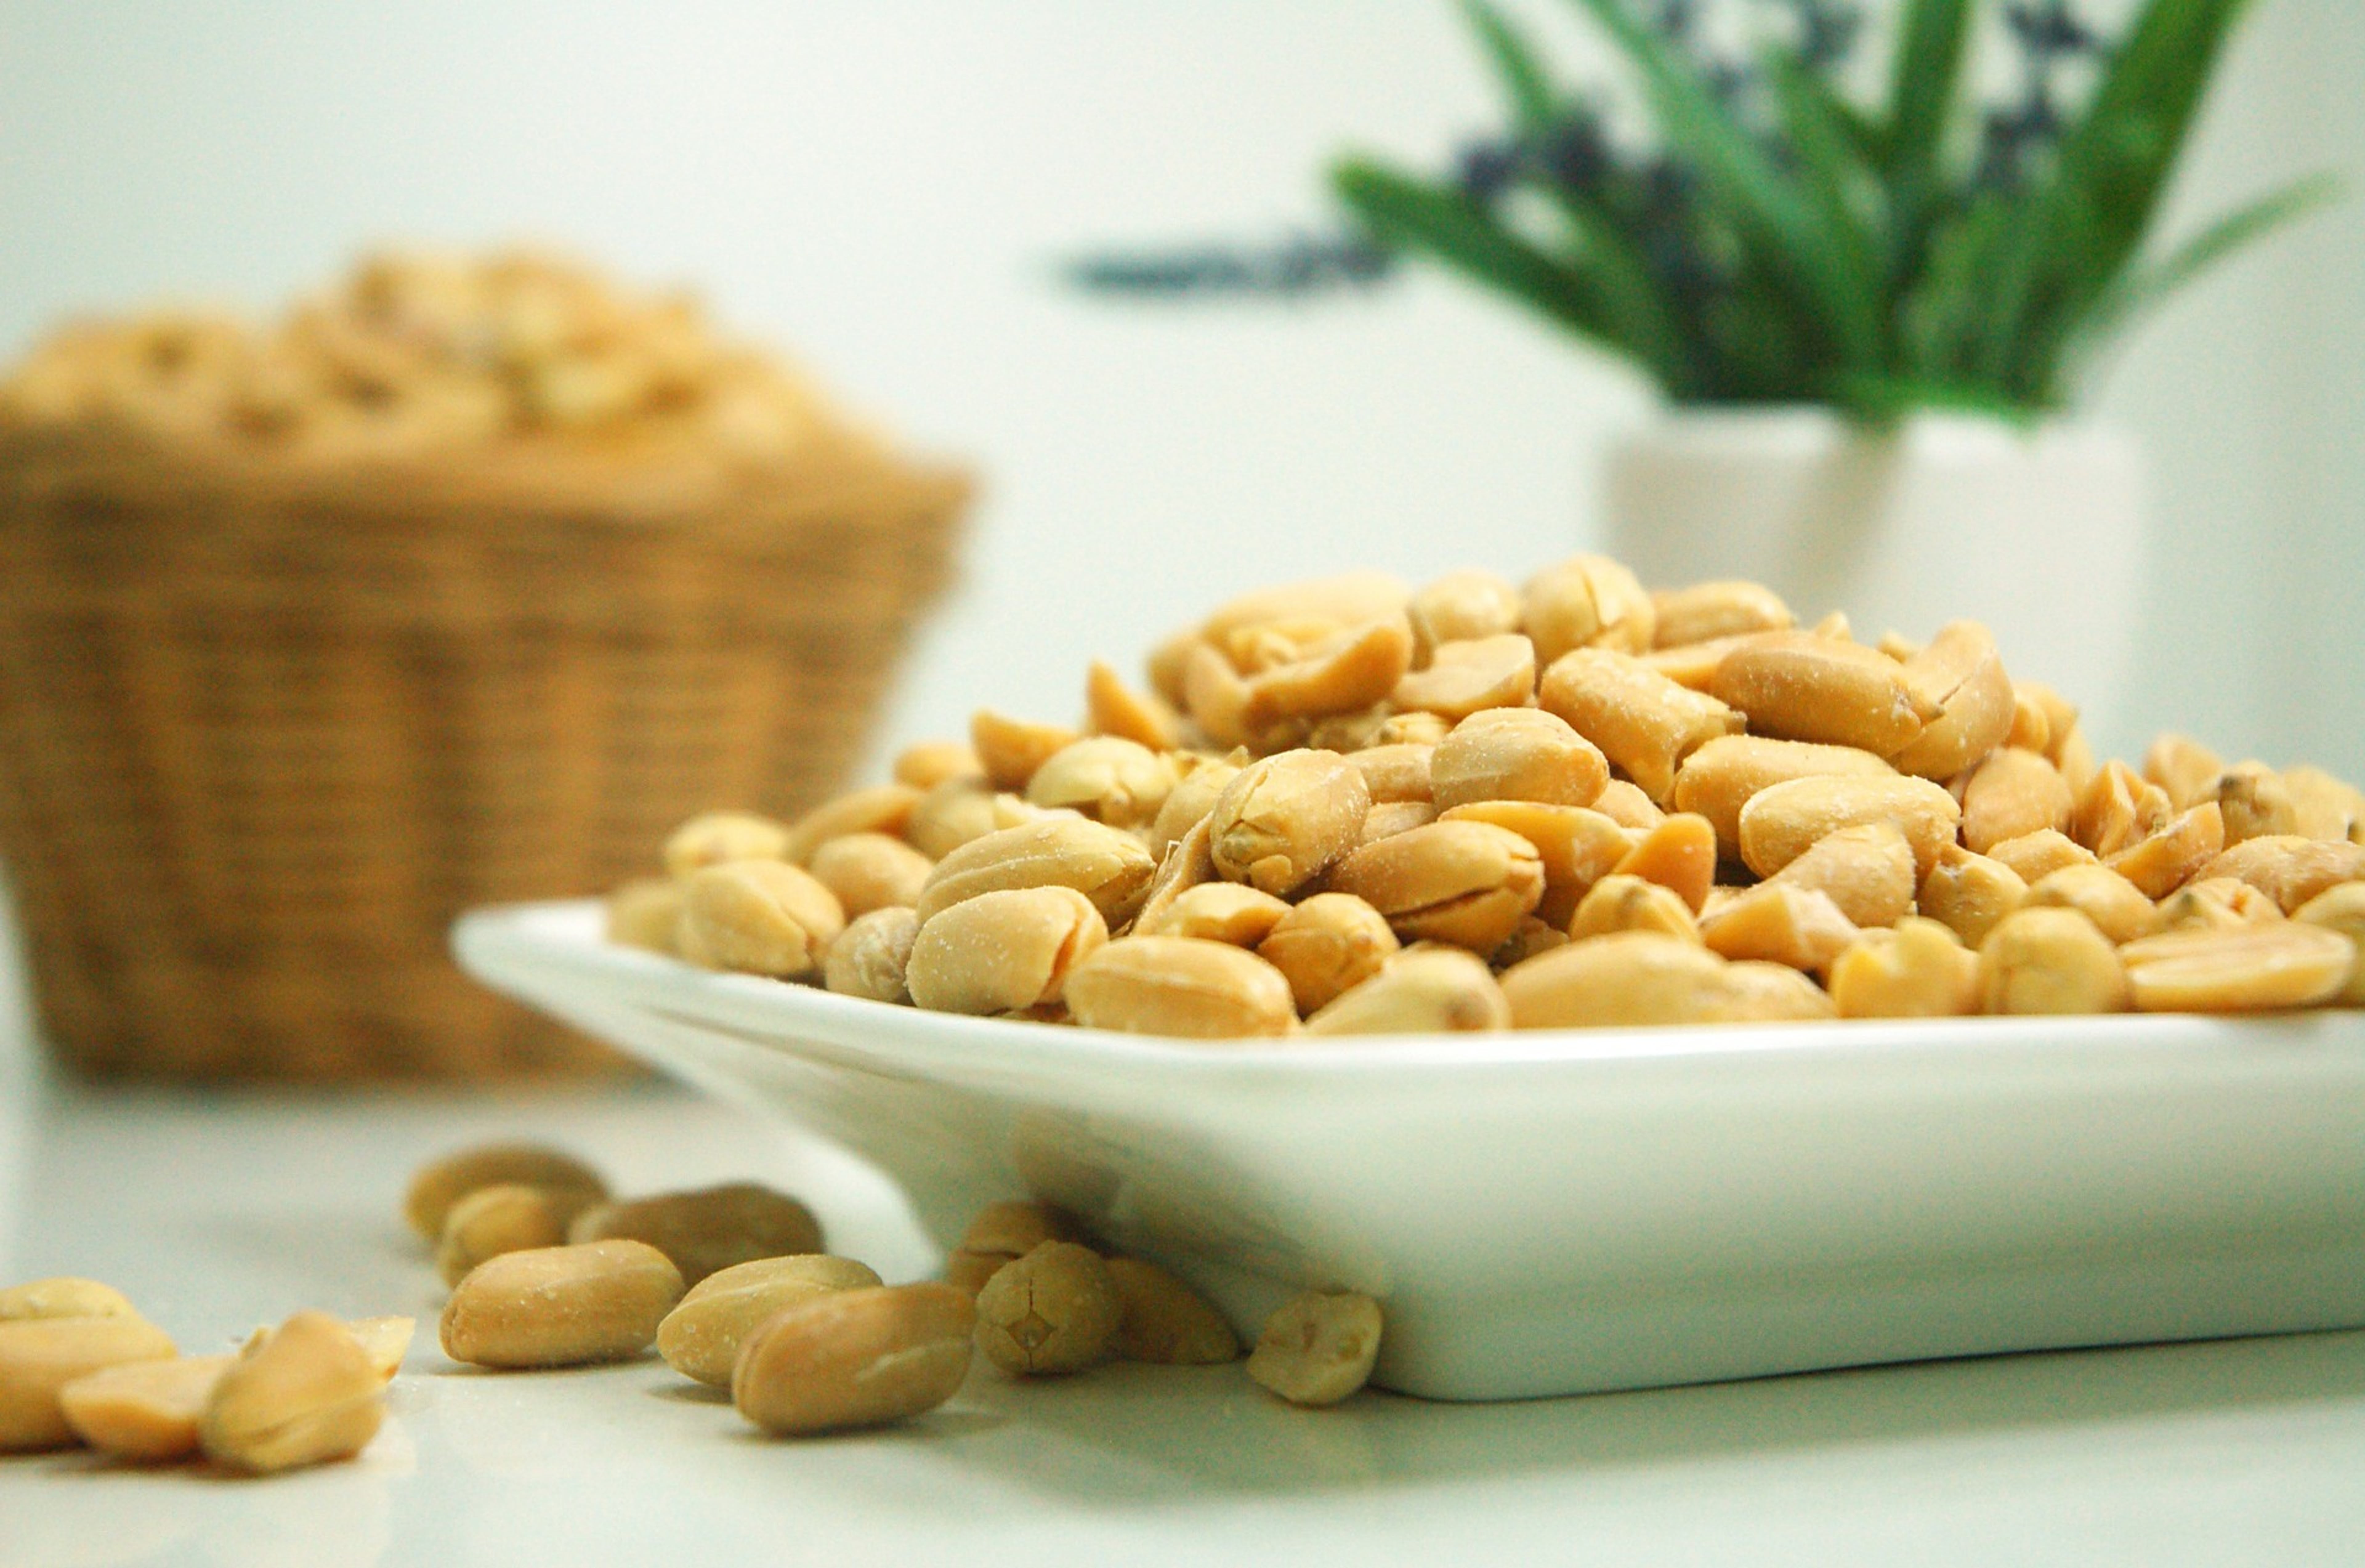 Aimmune Analysts Bullish On Strong Uptake Of Peanut Allergy Drug Palforzia